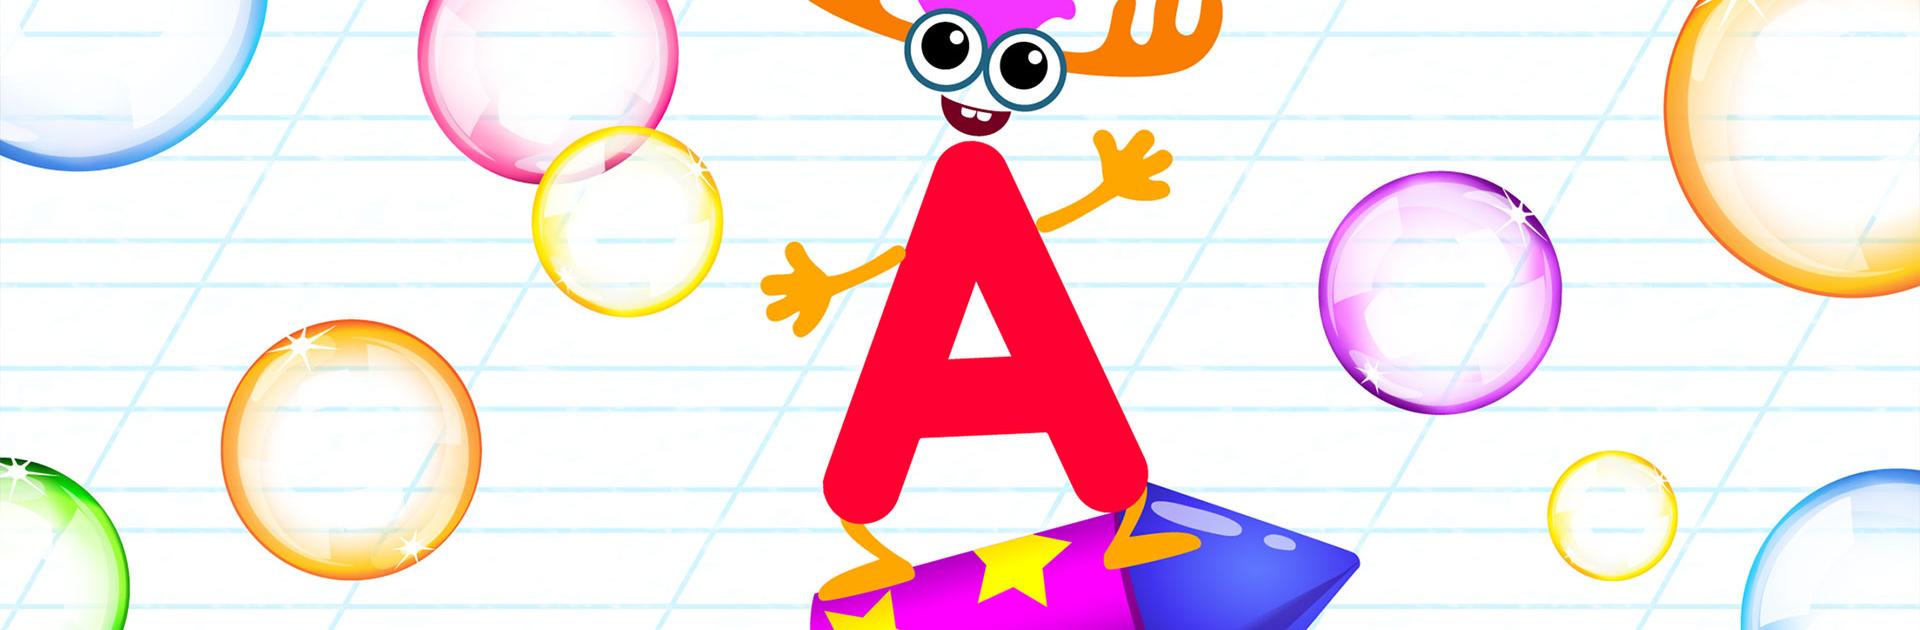 Bini ABC games for kids!